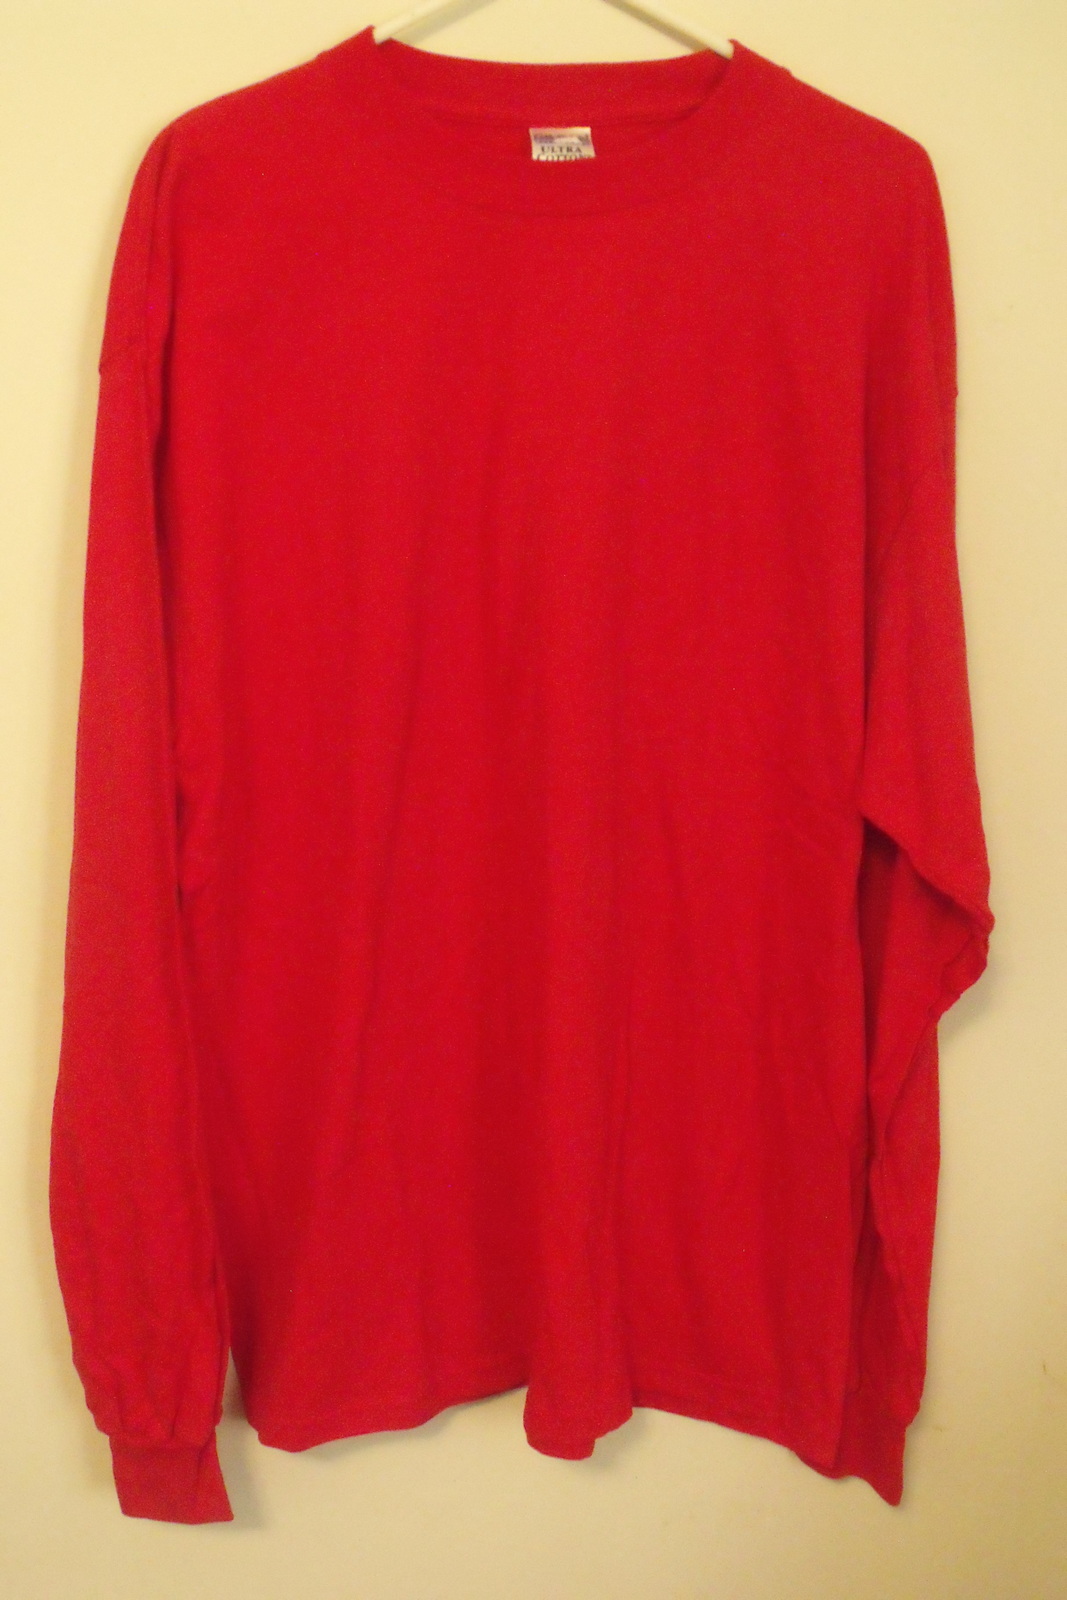 Mens Gildan NWOT Bright Red Long Sleeve T Shirt Size XL - Shirts